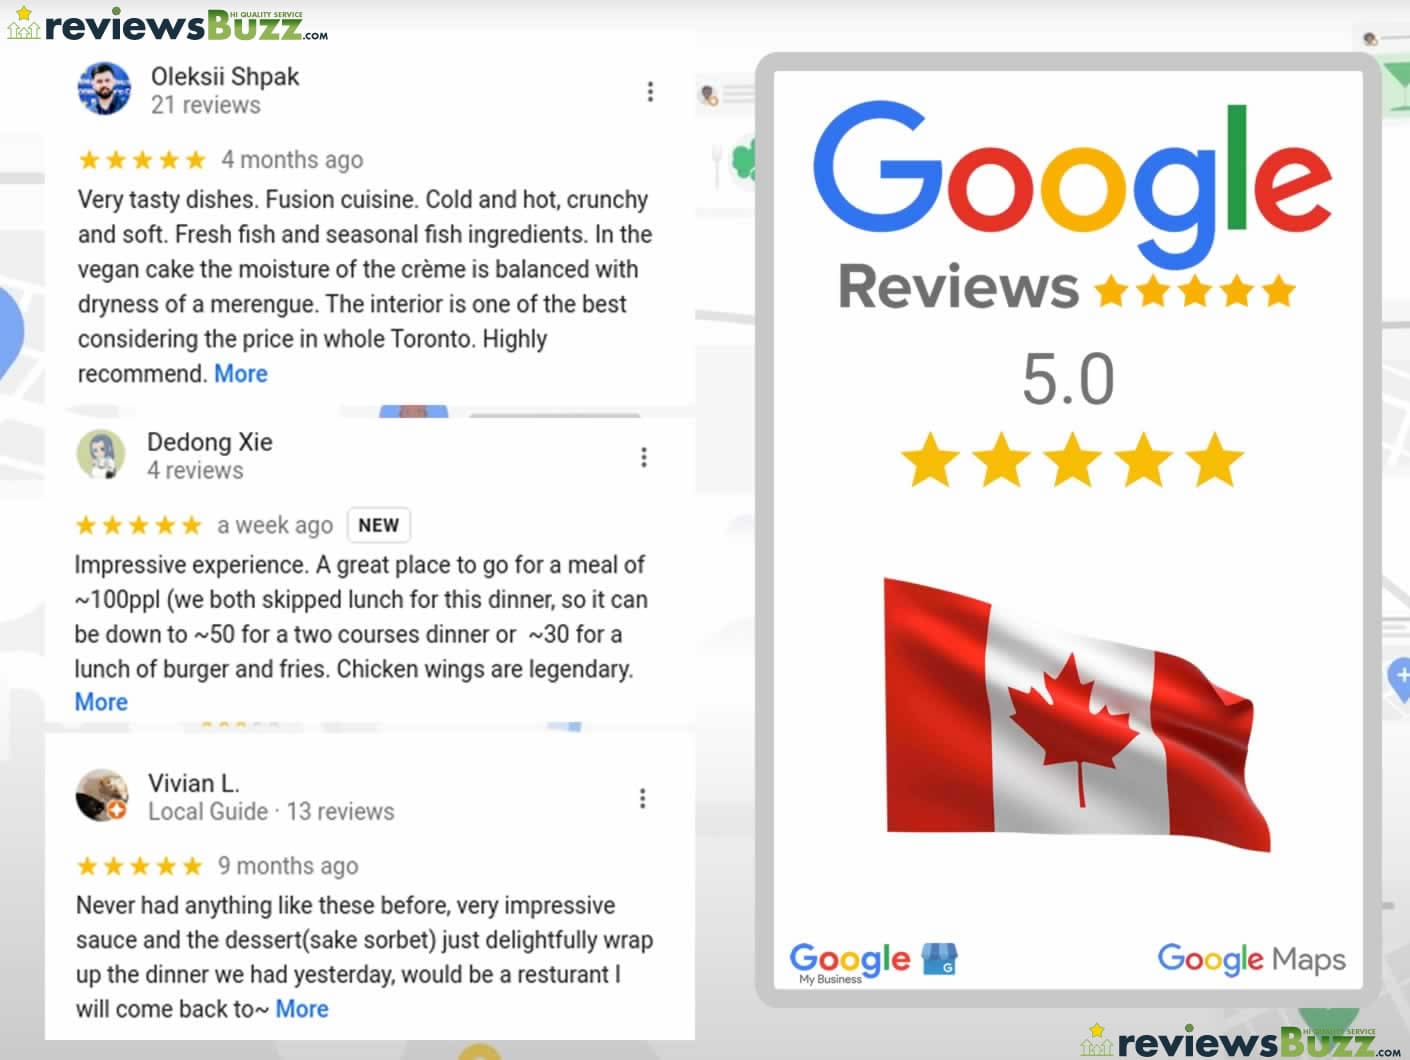 Acheter des avis Google au Canada, Avis Google au Canada, Acheter des avis Google au Canada, Avis Google de Canada Drives, Avis Google de Canada Life, Avis Google de Postes Canada